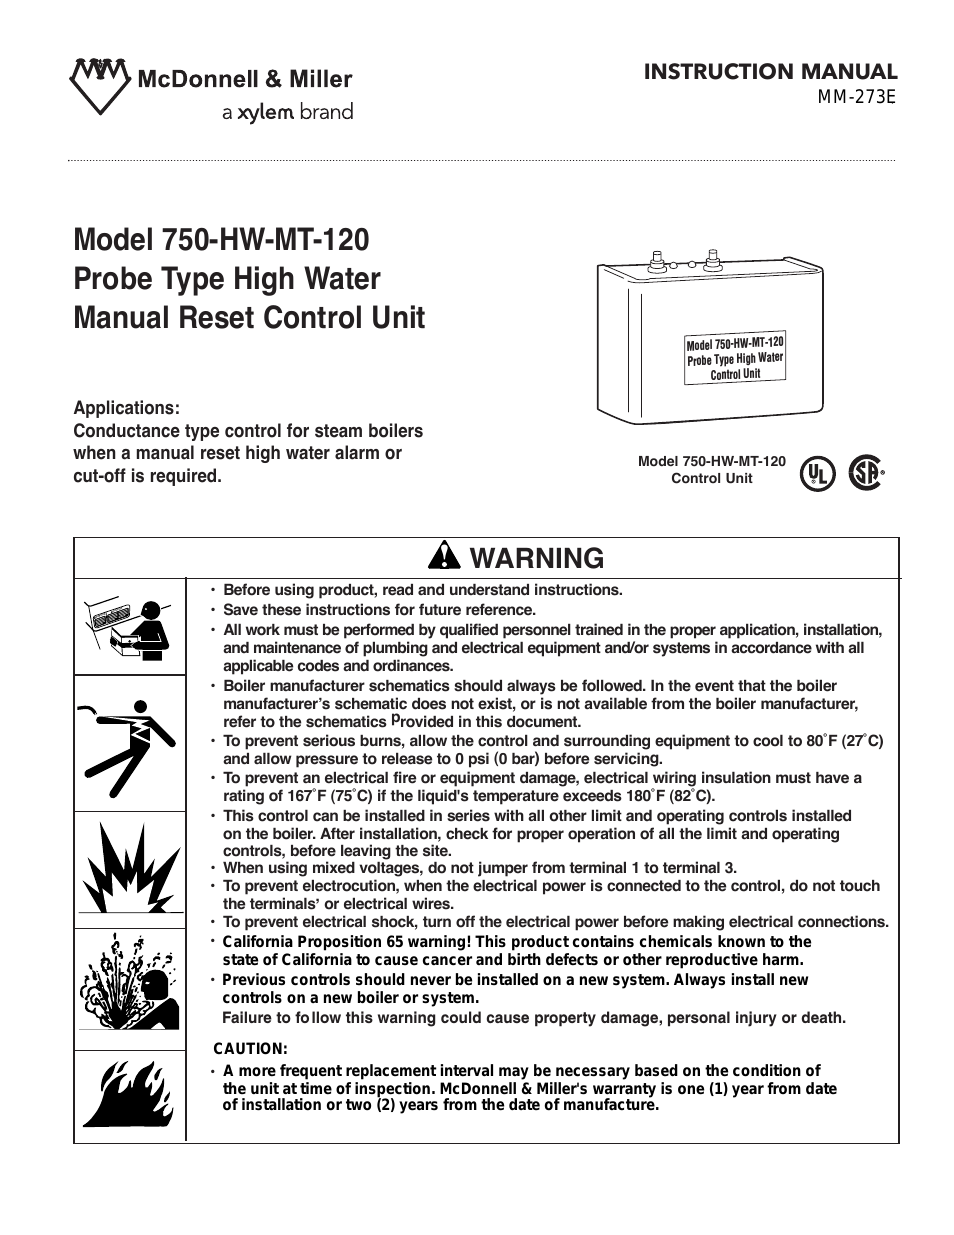 MM 273E Model 750-HW-MT-120 Probe Type High Water Manual Reset Control Unit